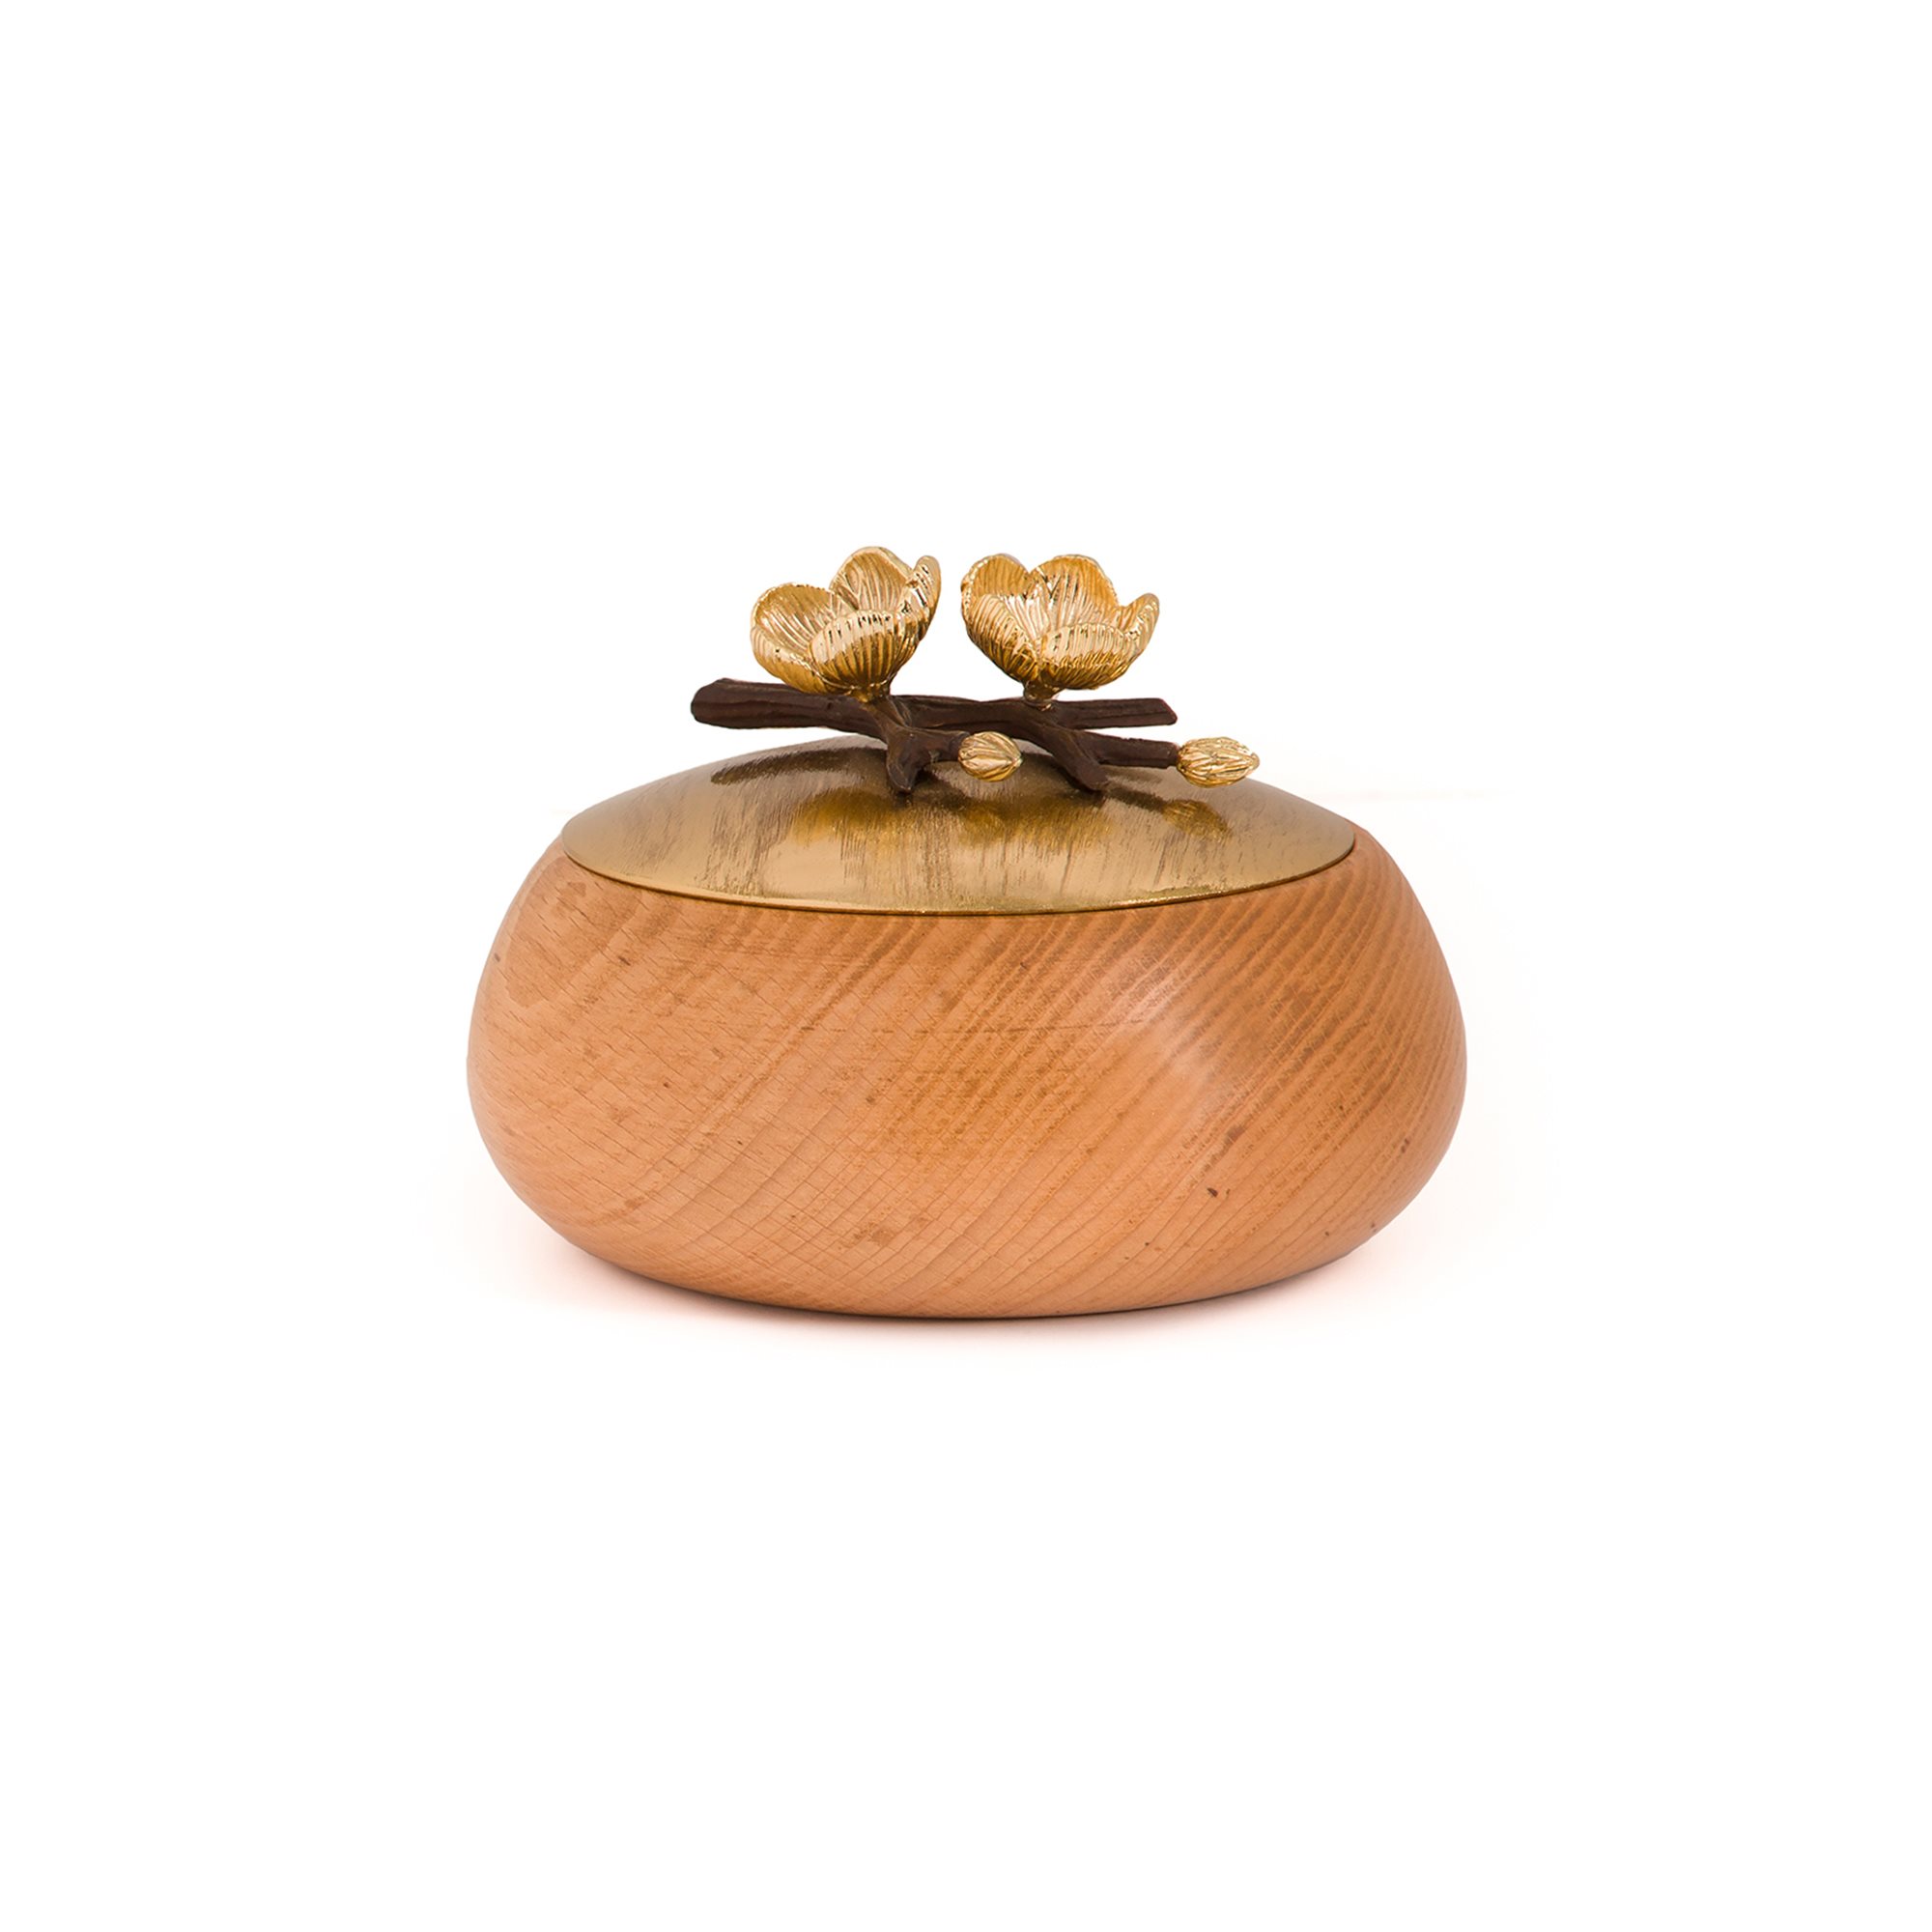 Marina Wood Bowl with Lid (Size C1)